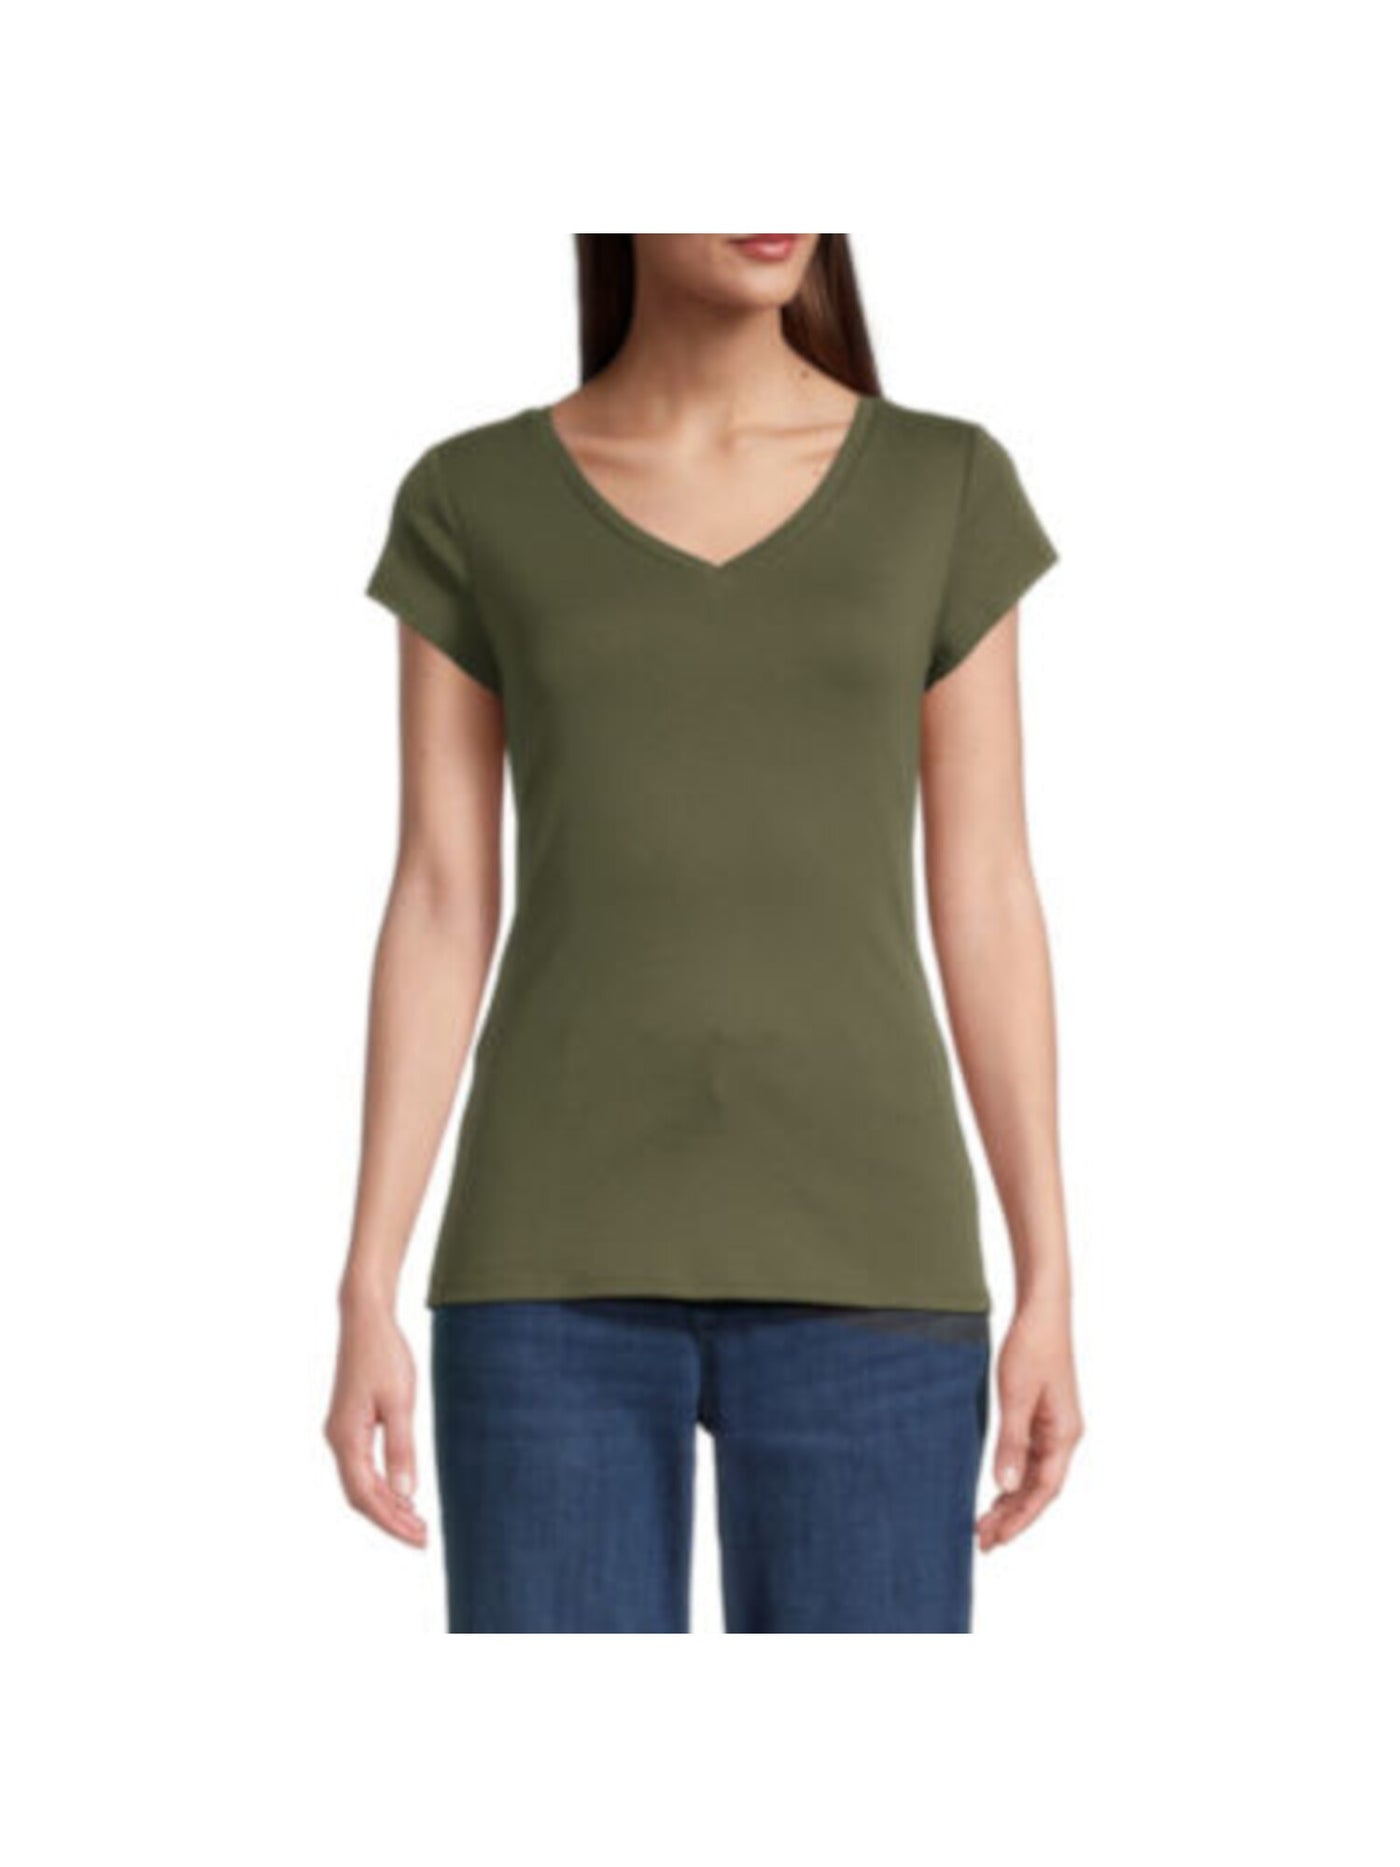 DOLAN Womens Green Stretch Ribbed Short Sleeve V Neck T-Shirt S